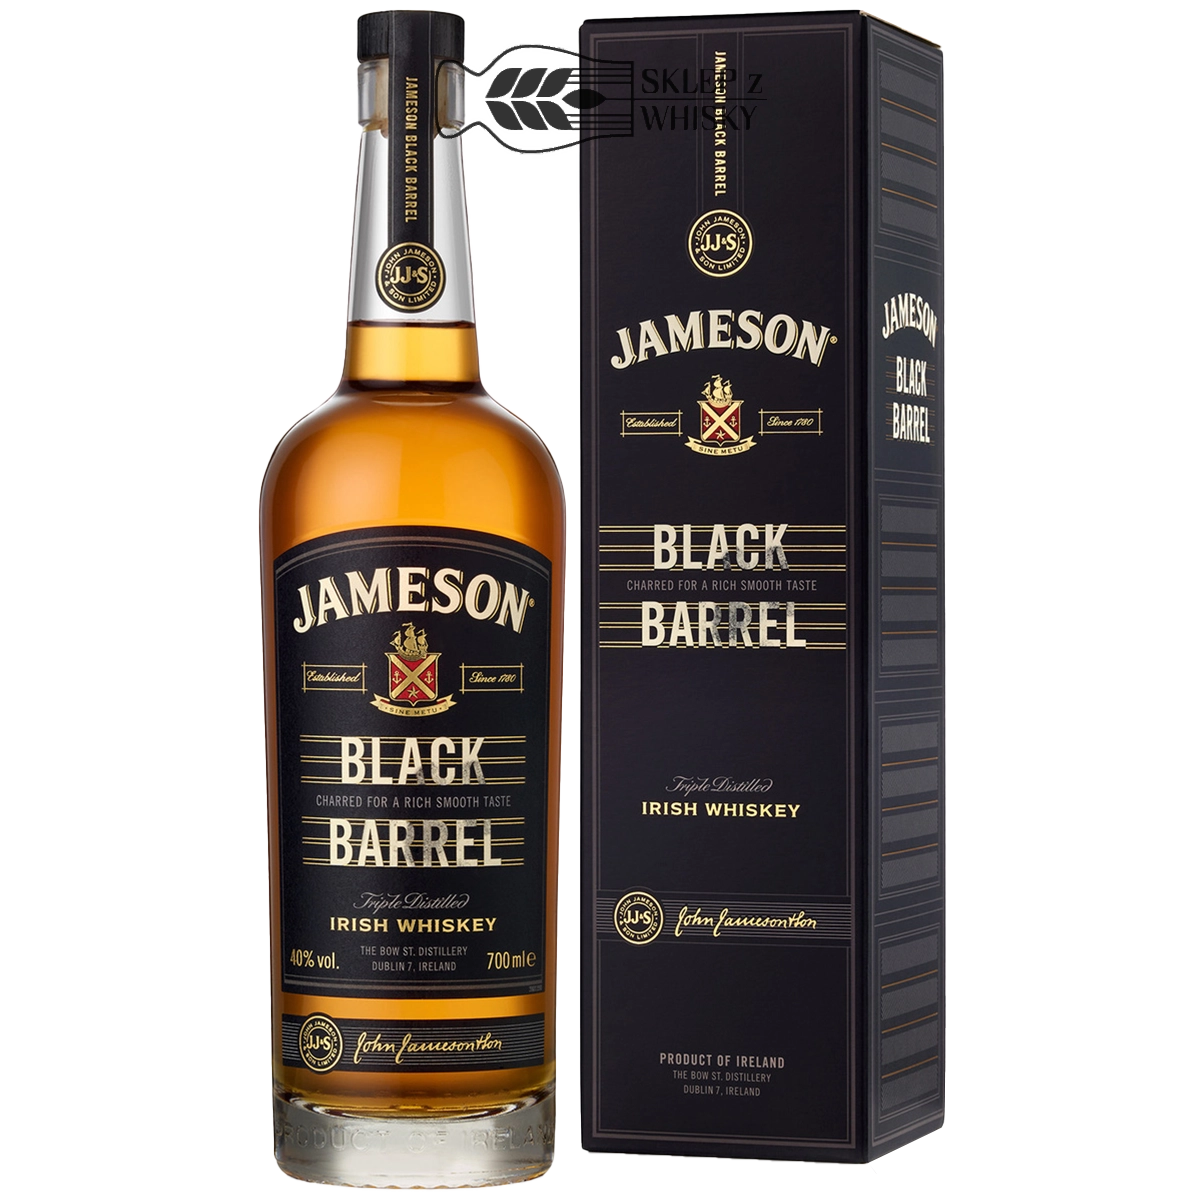 Jameson Black Barrel - irlandzka whisky blended, 700 ml, w pudełku.